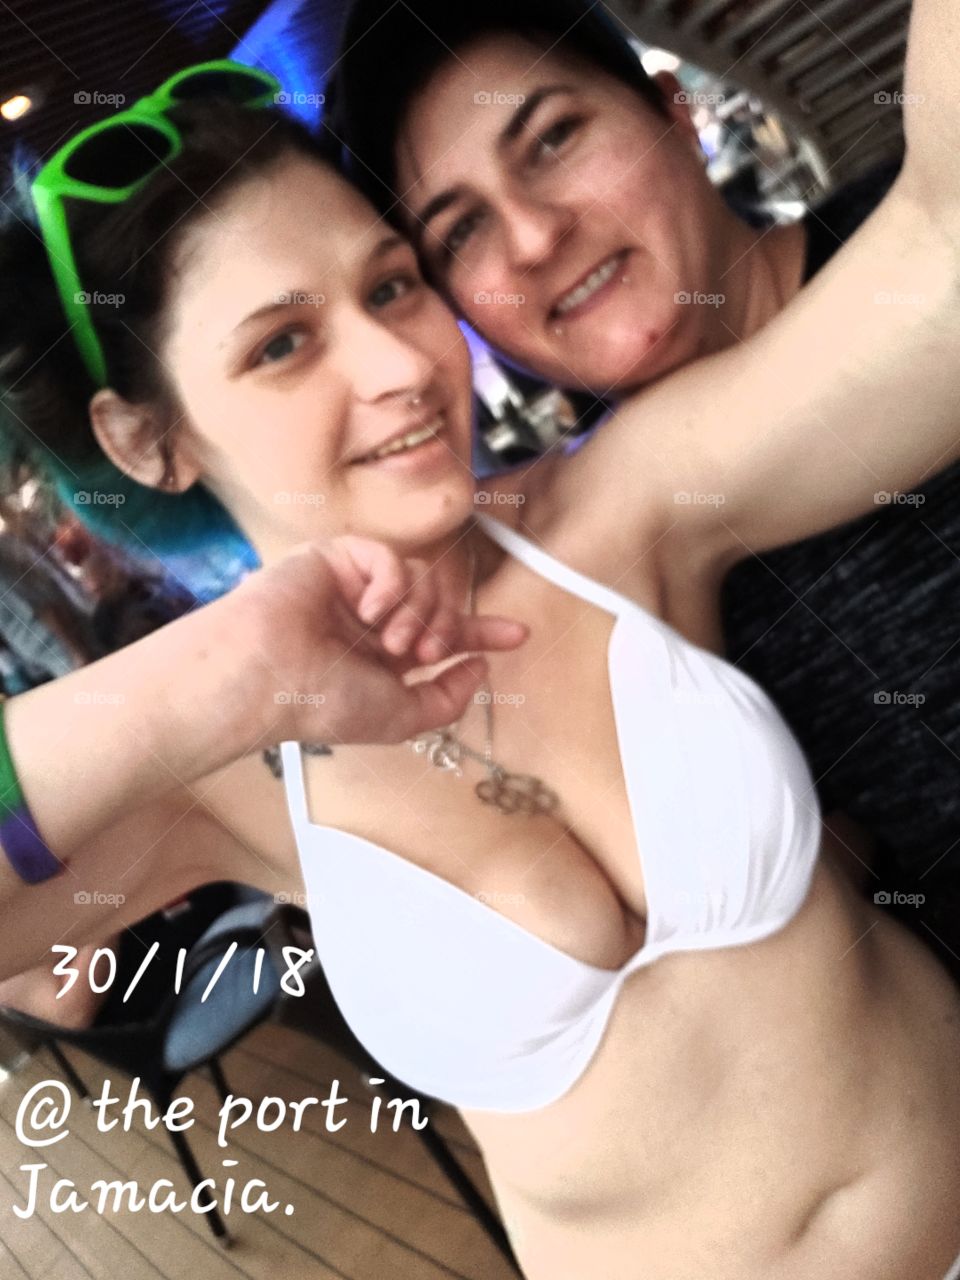 me (femme in white bikini, size 3, 34D, 125lbs) and my stud girlfriend.